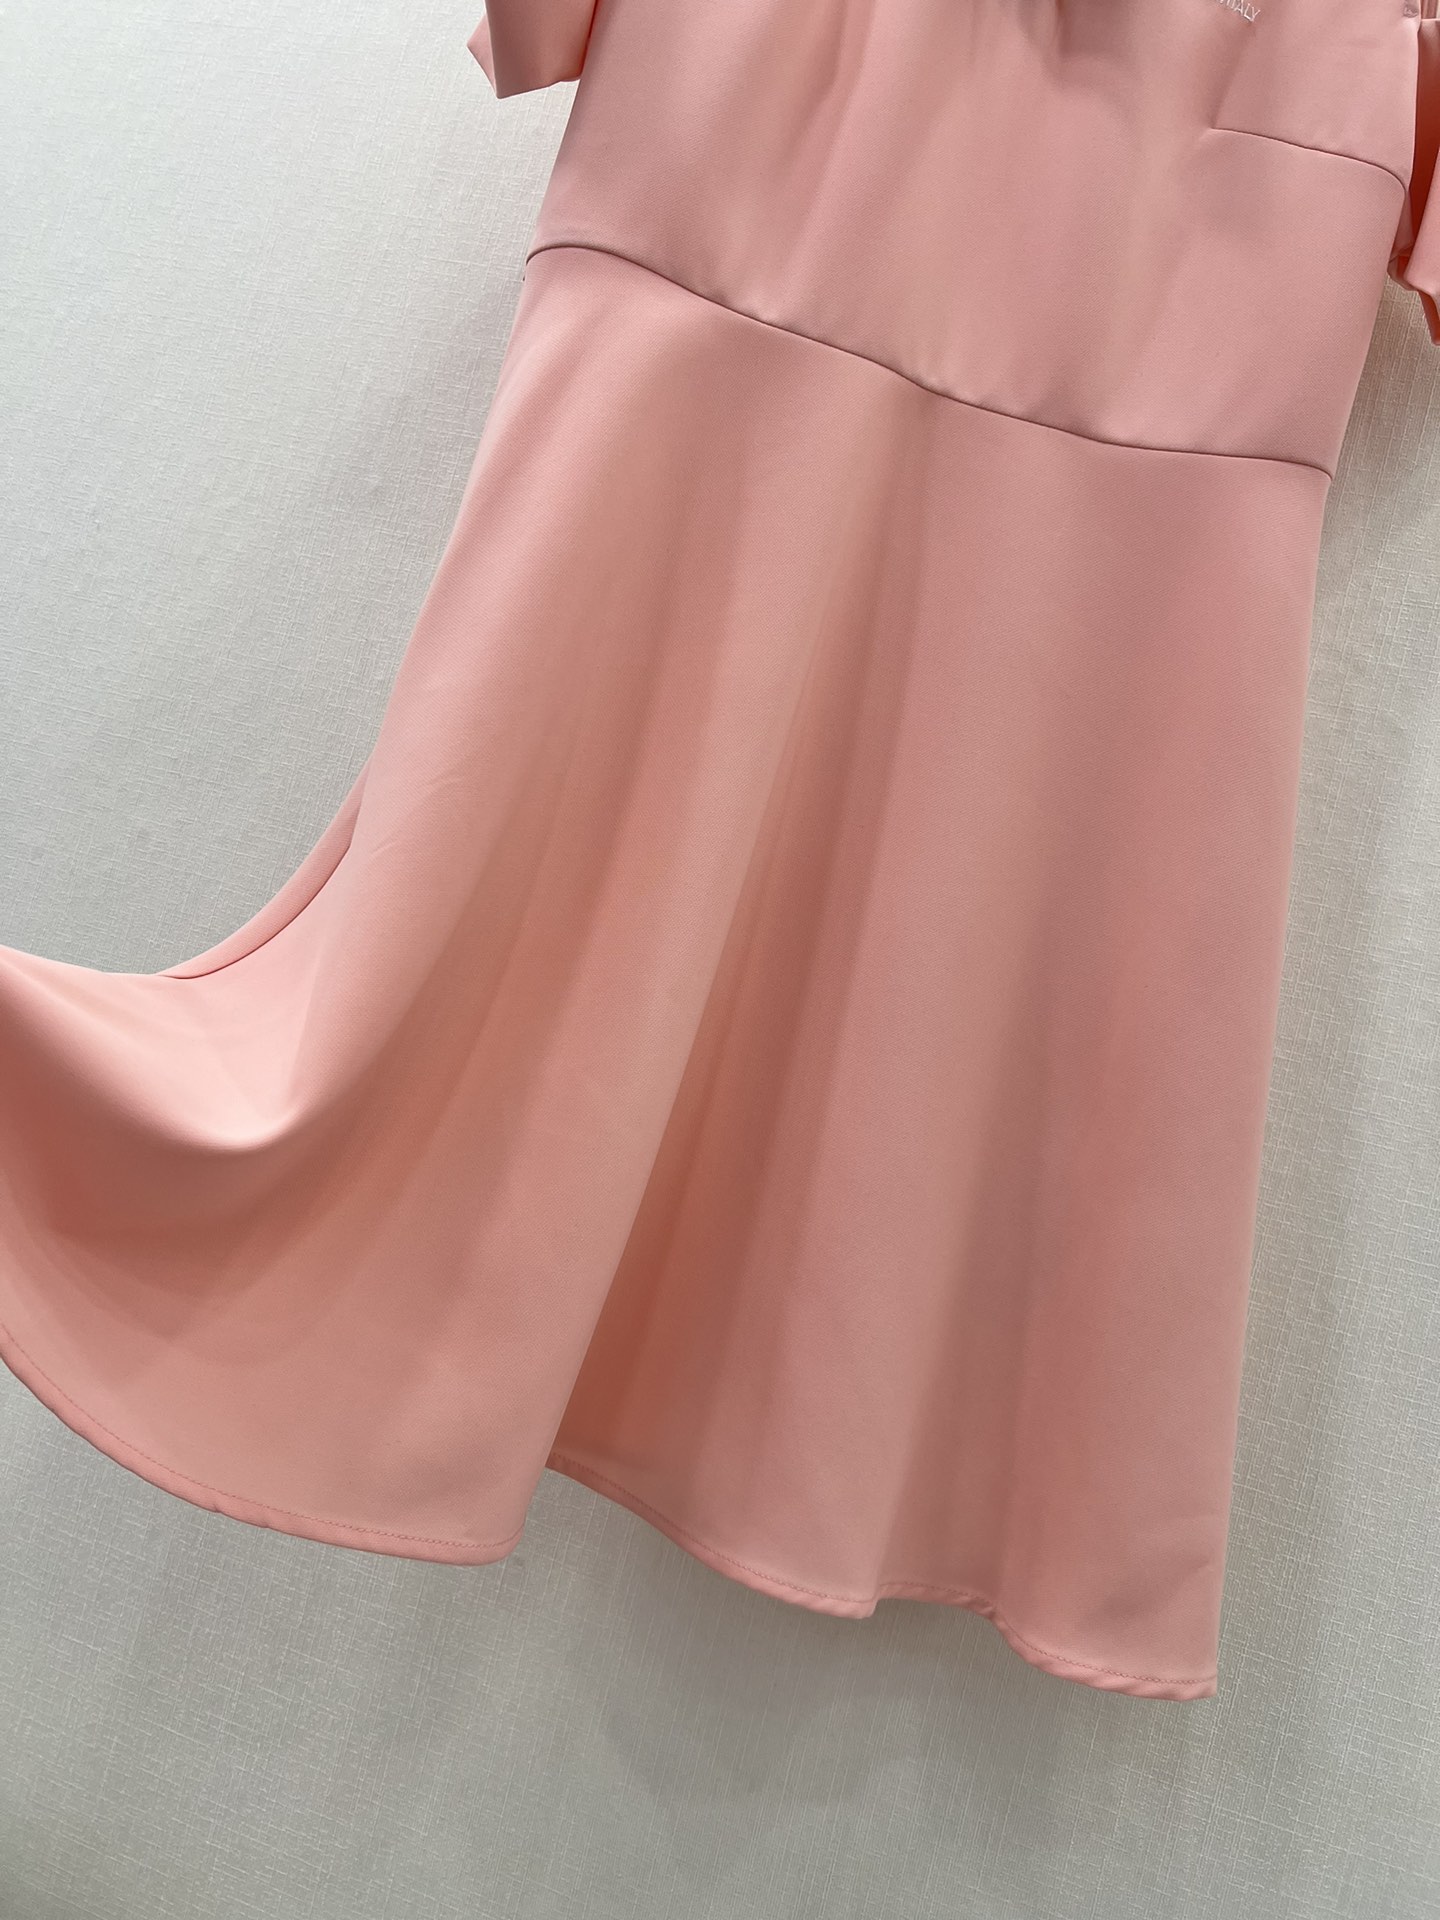 fendi キッズ ワンピーススーパーコピー 魅力的なスタイル スカート セクシー 優雅 高級品 ピンク_6